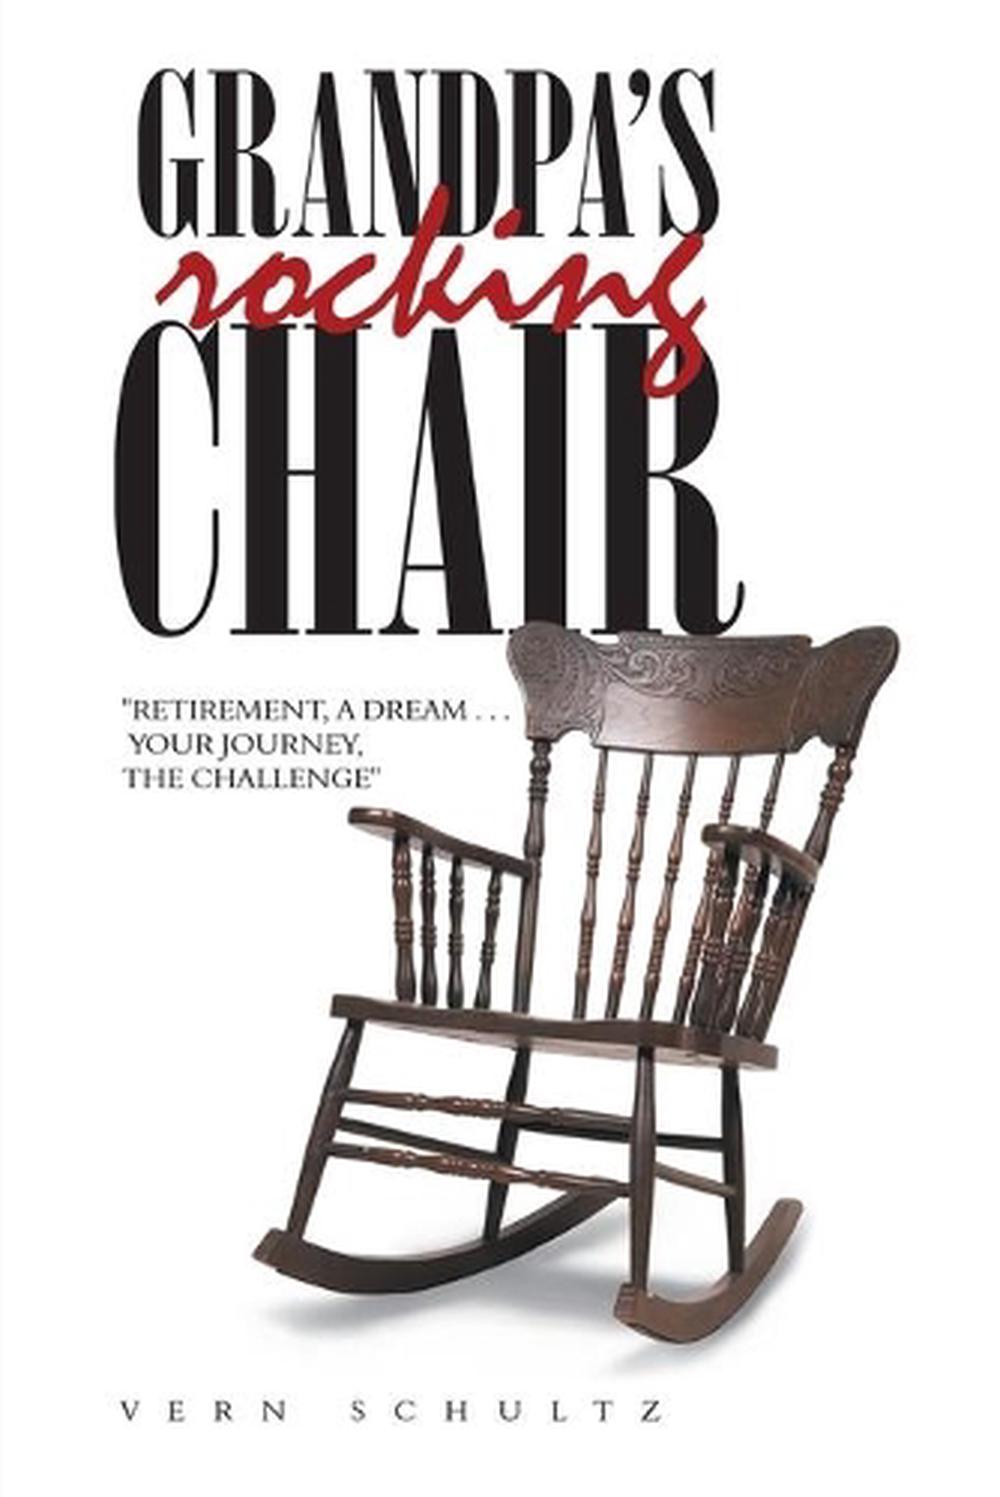 Grandpas Rocking Chair Retirement A Dream Your Journey The